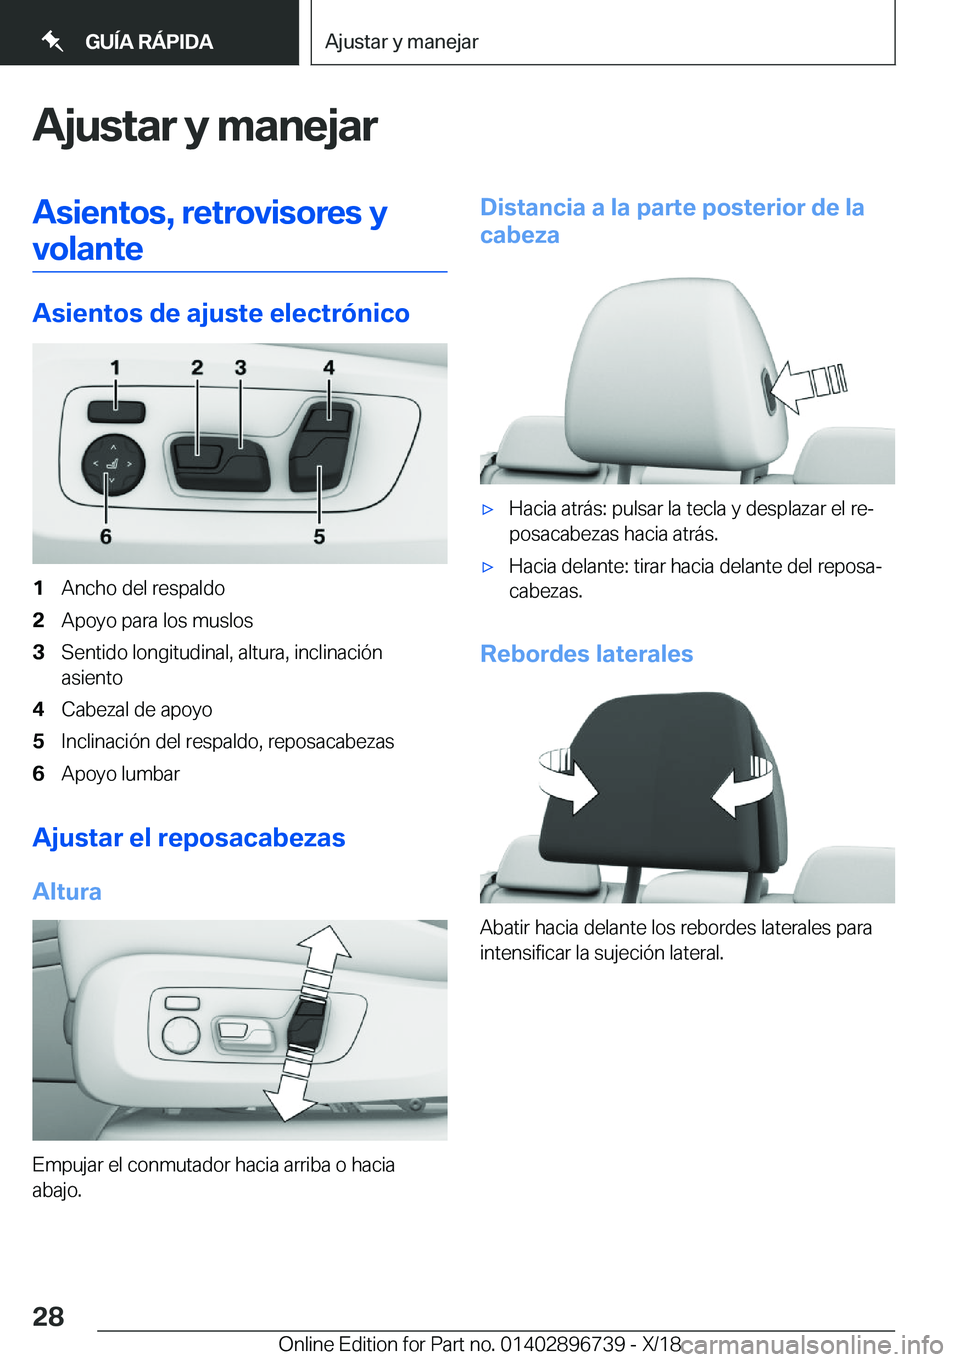 BMW X5 2019  Manuales de Empleo (in Spanish) �A�j�u�s�t�a�r��y��m�a�n�e�j�a�r�A�s�i�e�n�t�o�s�,��r�e�t�r�o�v�i�s�o�r�e�s��y
�v�o�l�a�n�t�e
�A�s�i�e�n�t�o�s��d�e��a�j�u�s�t�e��e�l�e�c�t�r�